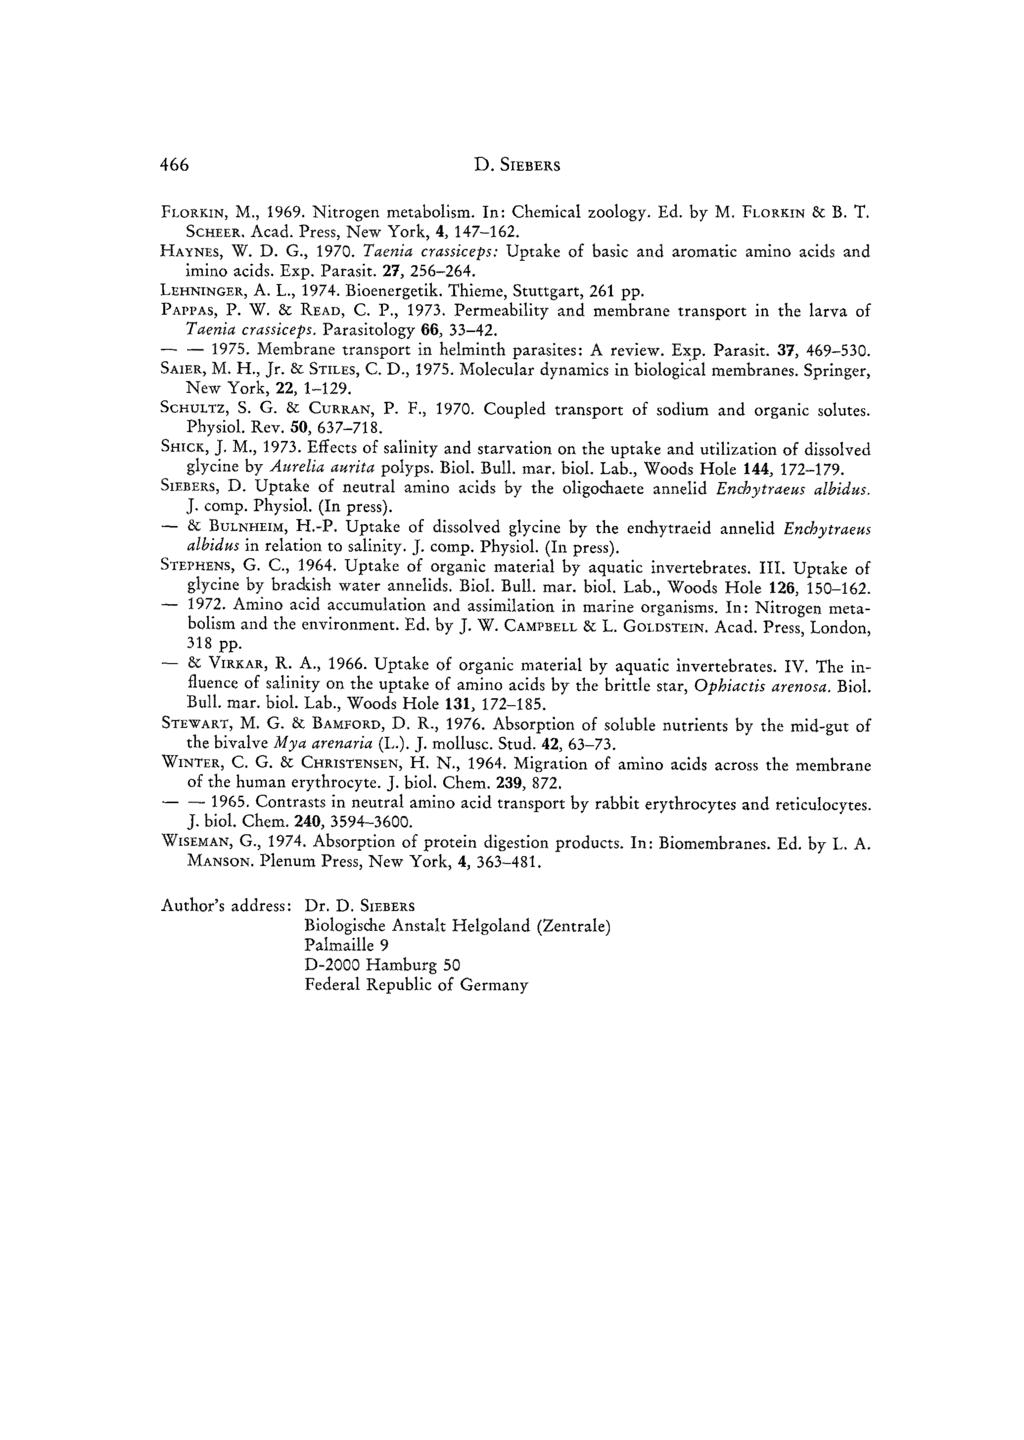 - - & - - 1972. - - & - - -- 466 D. SIEBERS FLOt~Km, M., 1969. Nitrogen metabolism. In: Chemical zoology. Ed. by M. FLORKIN & B. T. SCHEER. Acad. Press, New York, 4, 147-162. HAXNES, W. D. G., 1970.